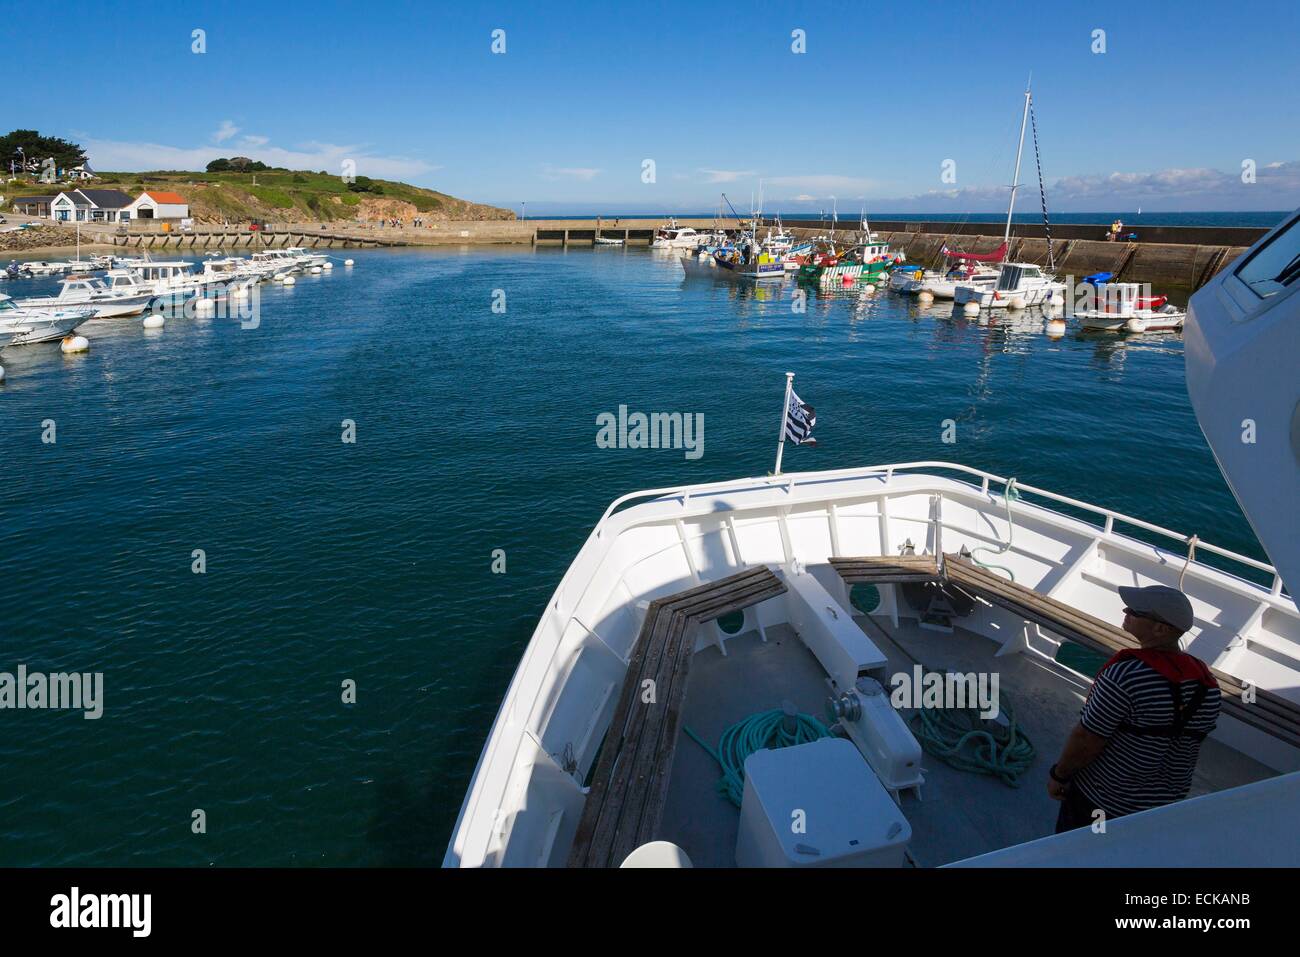 France, Morbihan, the Gulf of Morbihan, the Ponant islands, the island of Houat, the arrival of a cruise ship Stock Photo